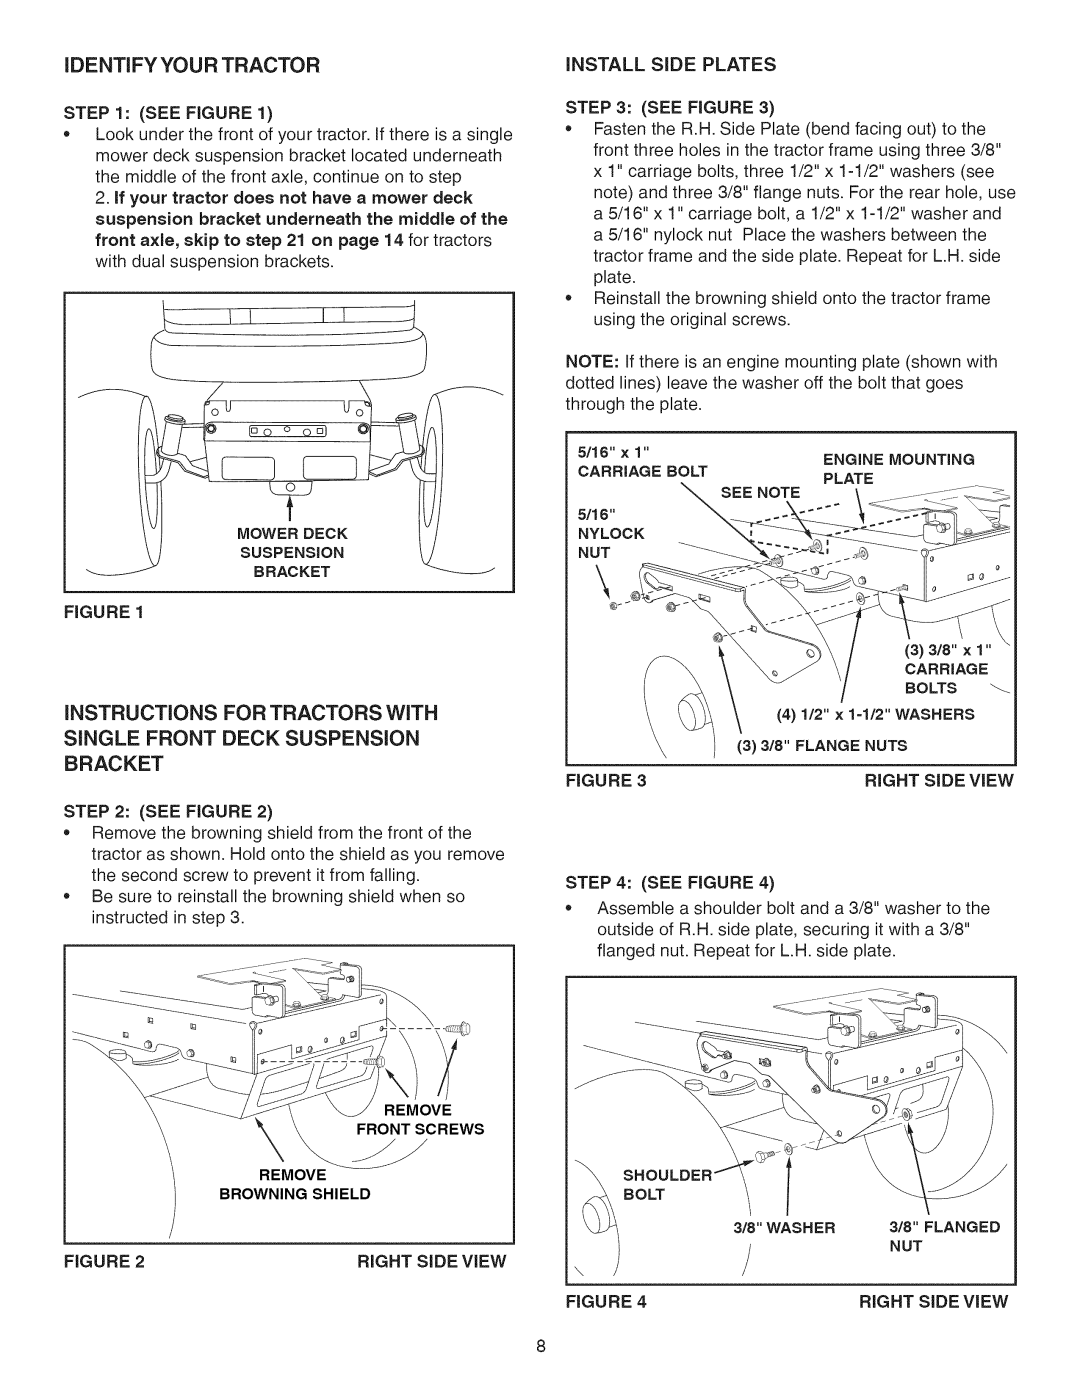 Craftsman 486.24837 manual Bracket, Remove Front Screws Remove Browning Shield 